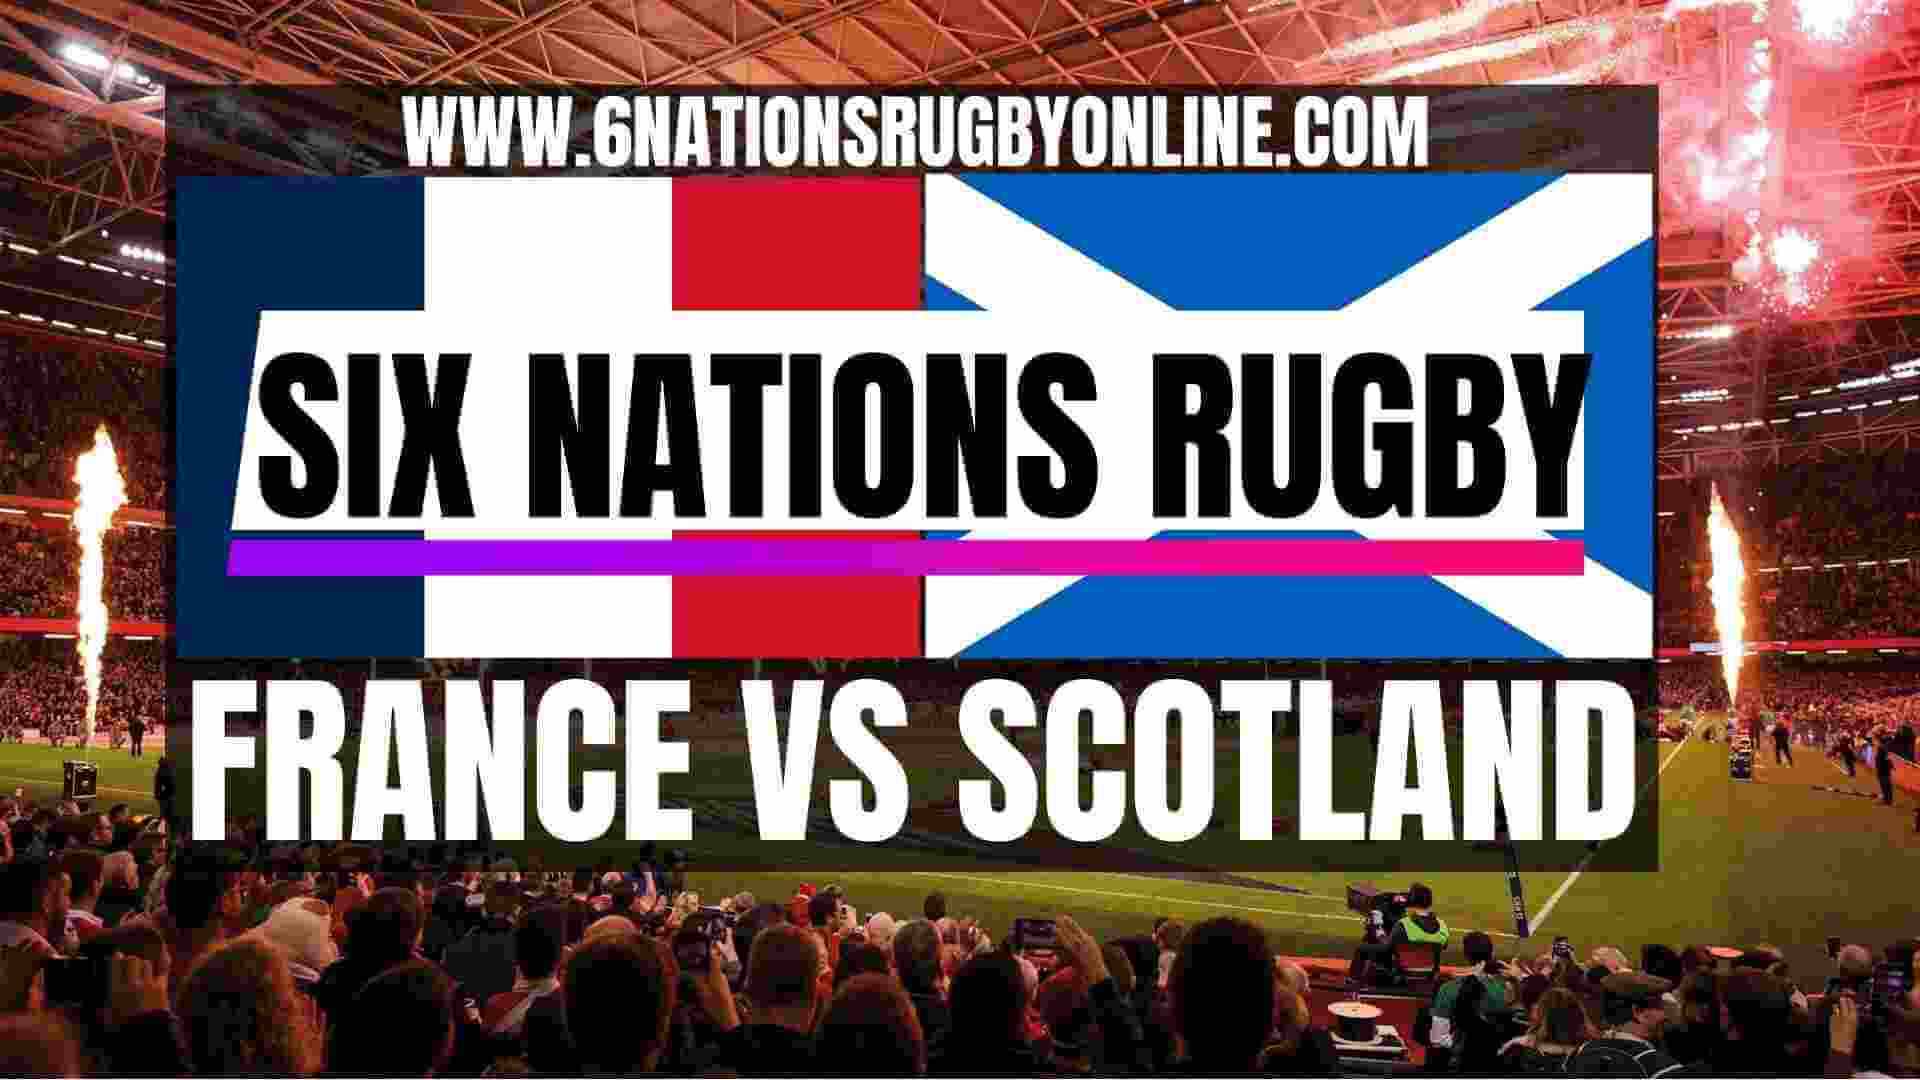 Scotland Vs France Rugby Live Stream On 23 Feb 2019